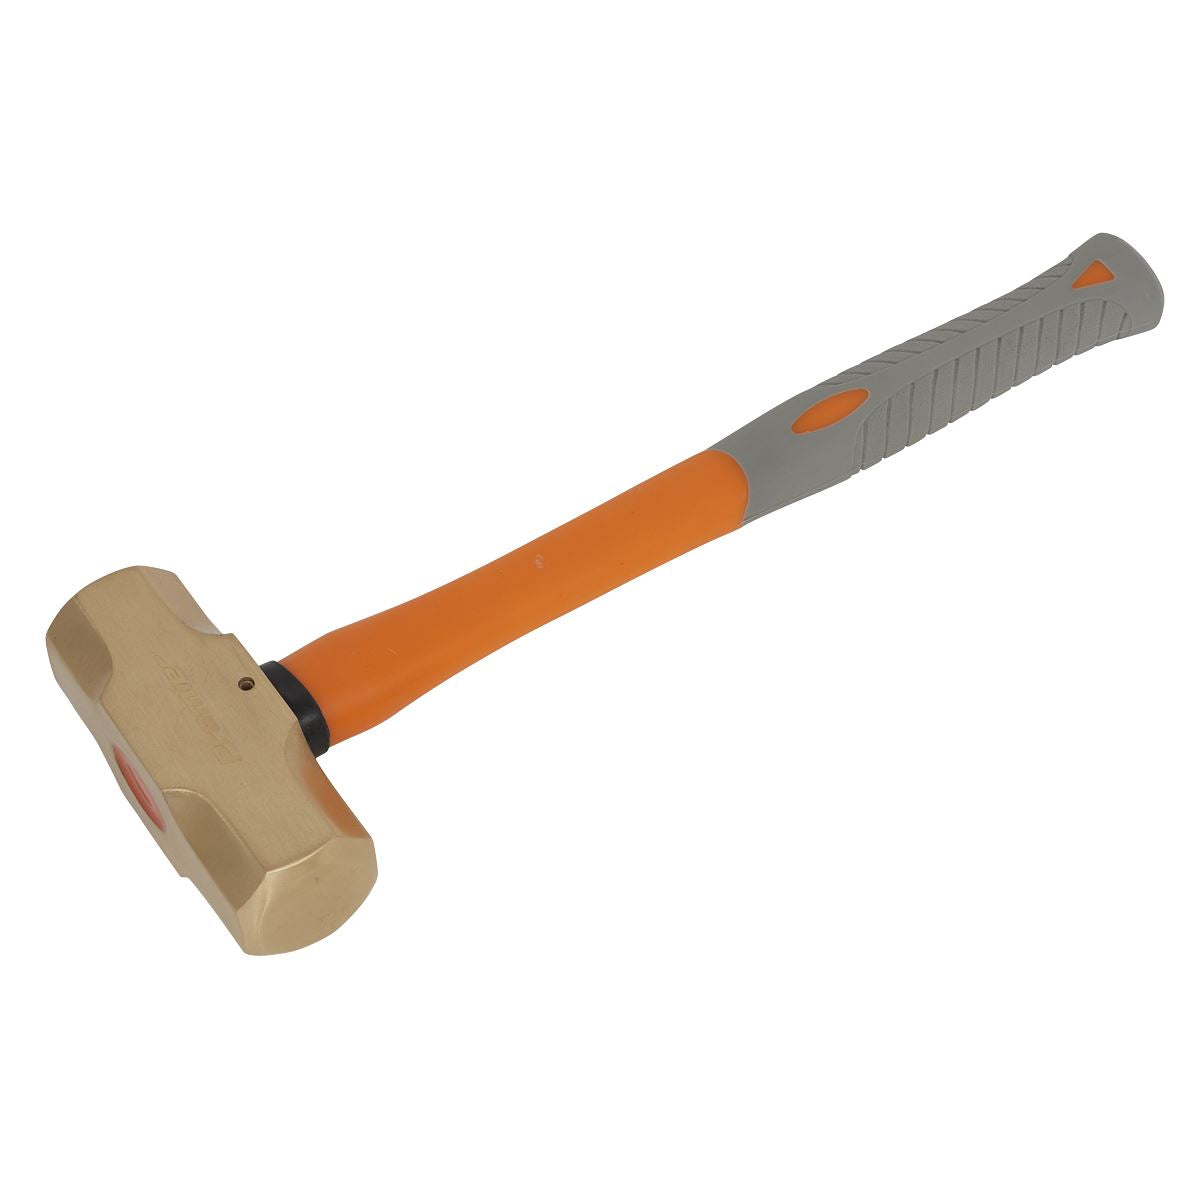 Sealey Premier Sledge Hammer 4.4lb - Non-Sparking